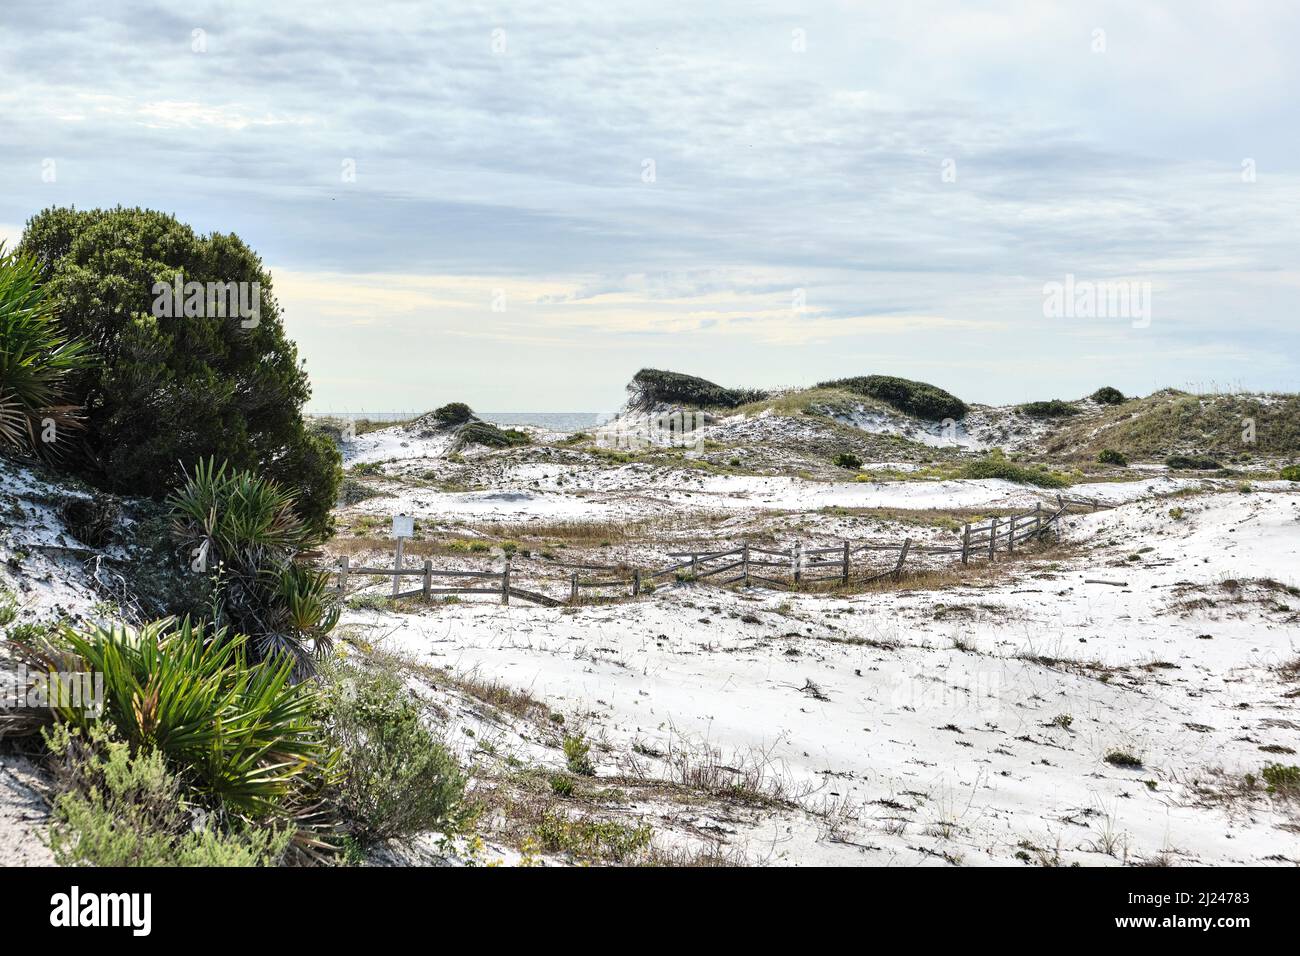 Florida coastal white sand dunes and a split rail fence near the Florida Gulf coast beach at Watersound Florida, USA. Stock Photo